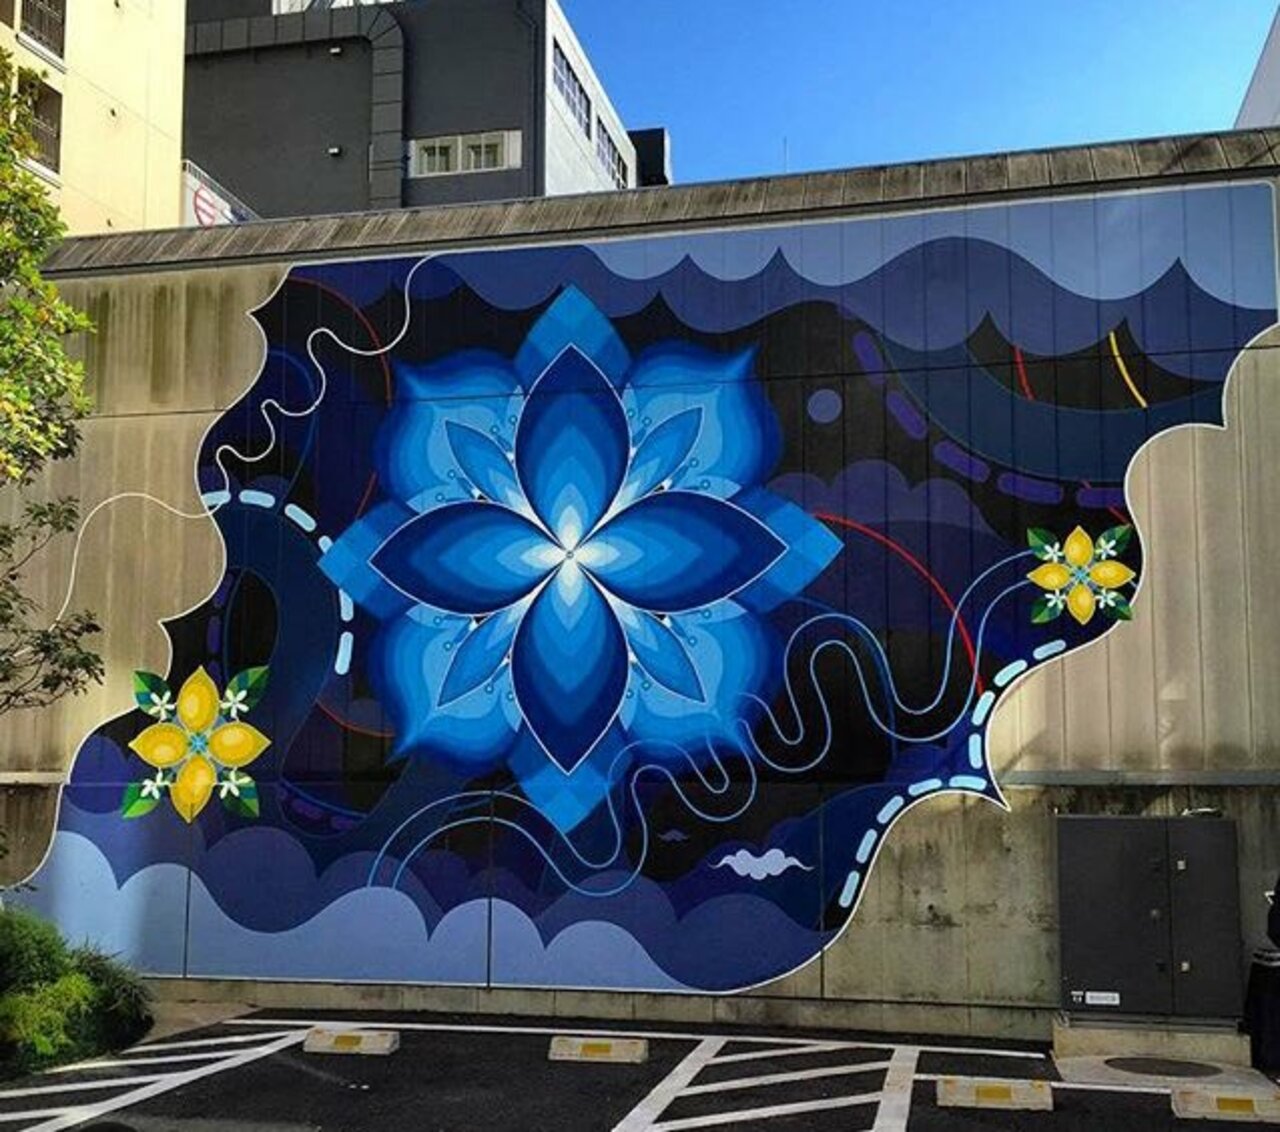 New Street Art by htzk, kami_htzk + sasu_lyri 

#art #graffiti #mural #streetart https://t.co/B0yMp0tfoi